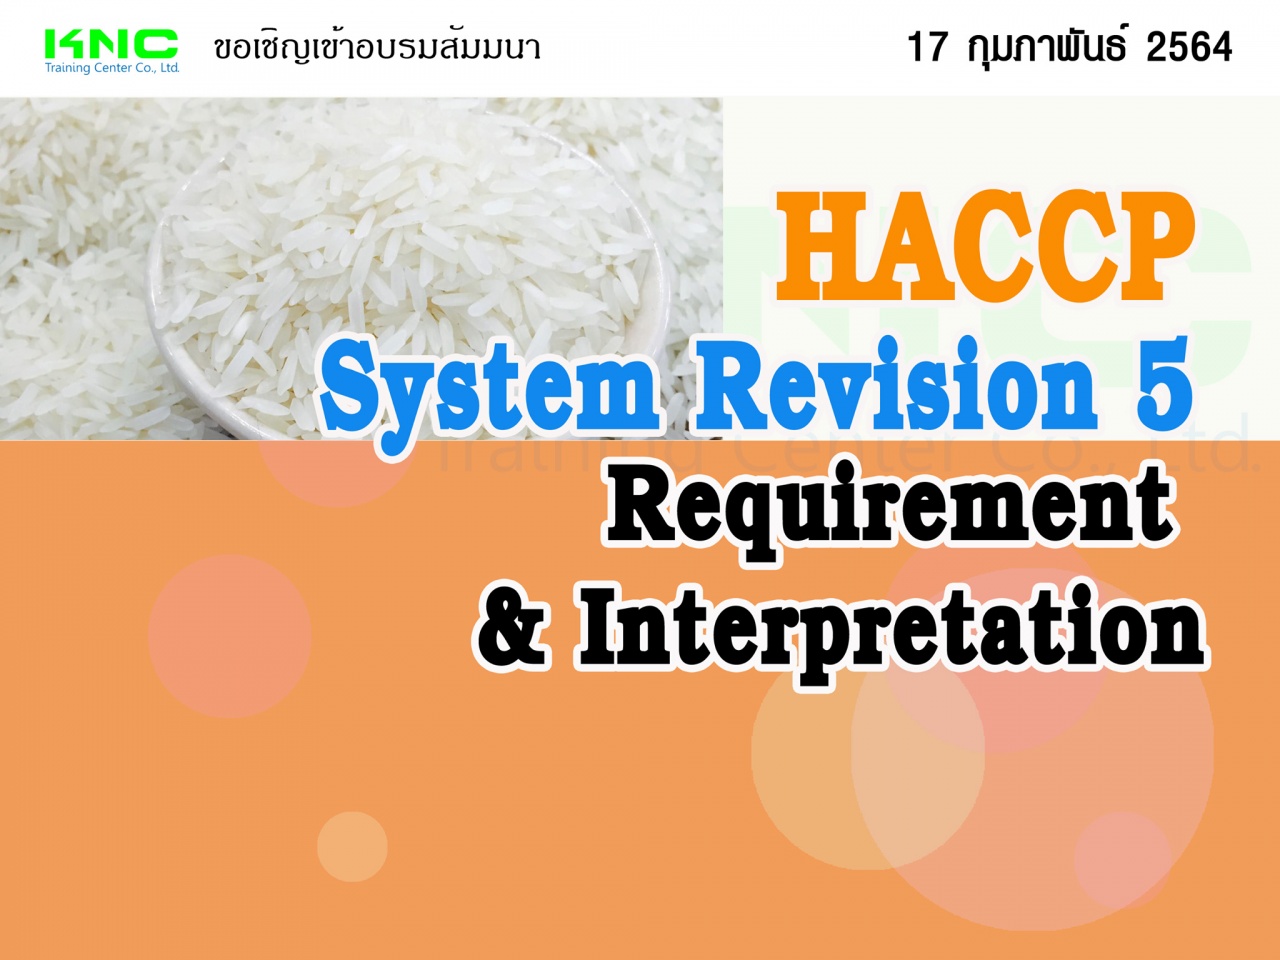 HACCP System Revision 5 Requirement & Interpretation